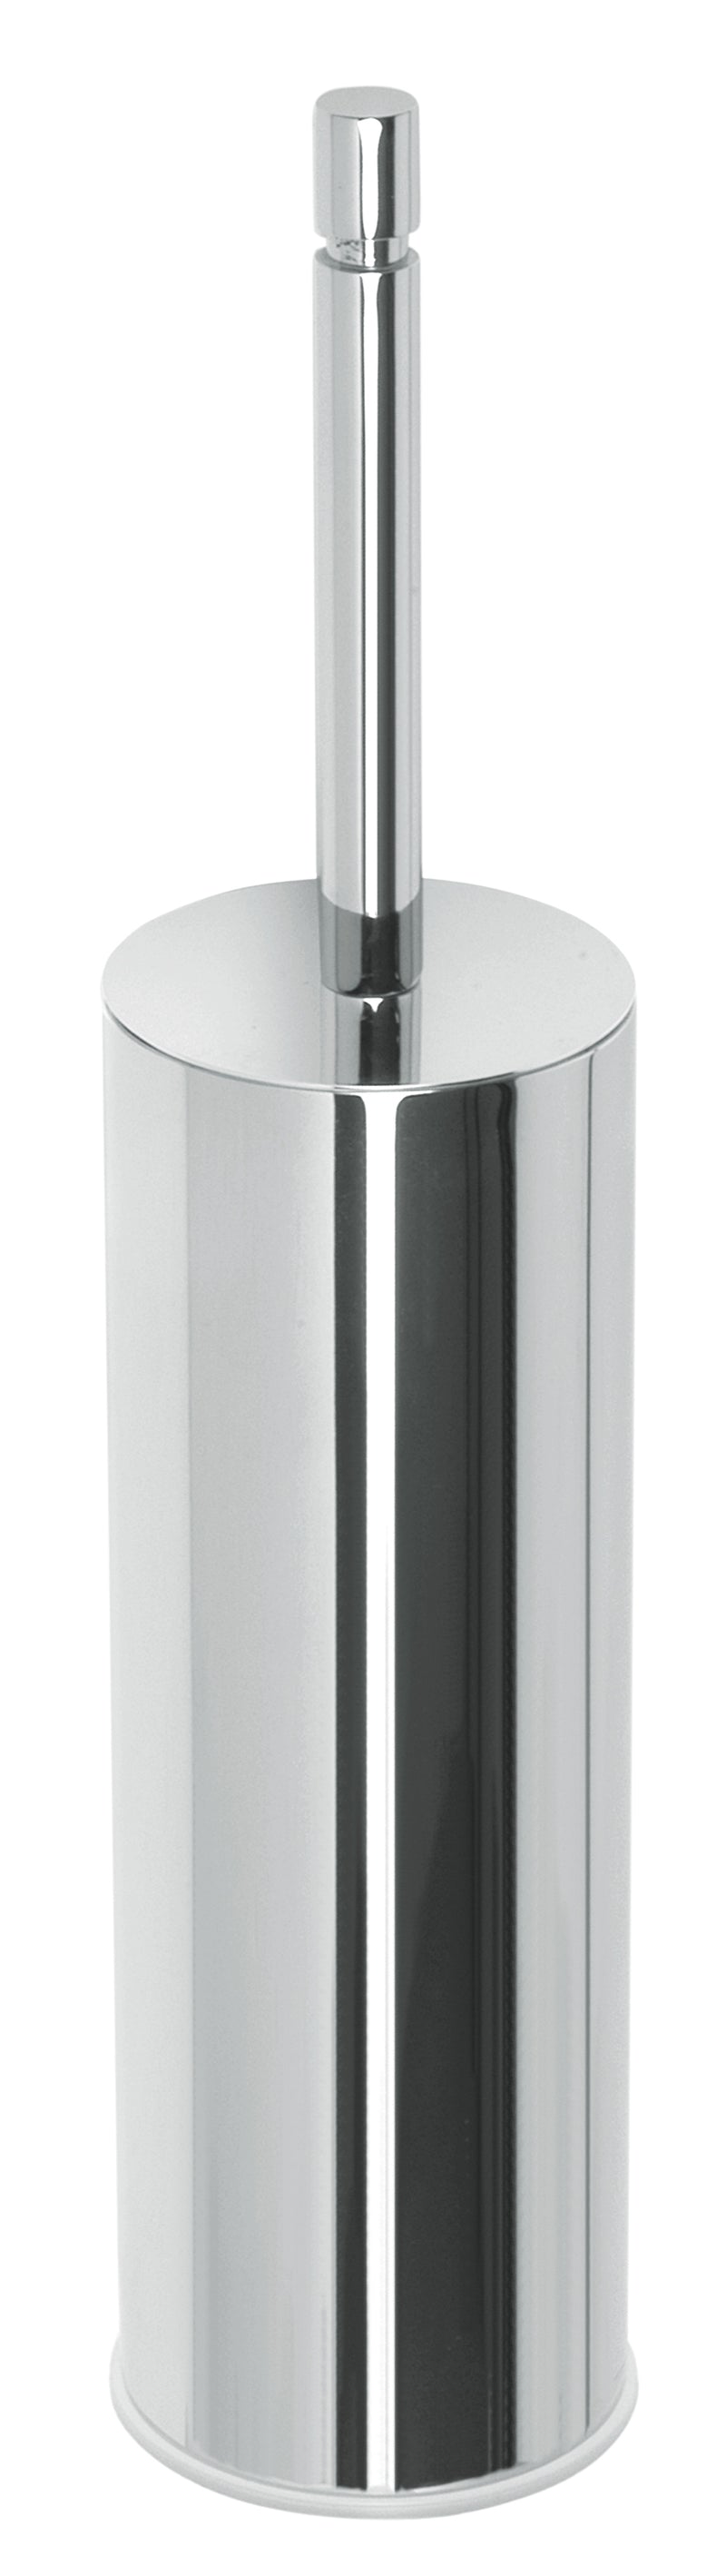 Valsan Axis Chrome Freestanding Toilet Brush Holder - Stellar Hardware and Bath 